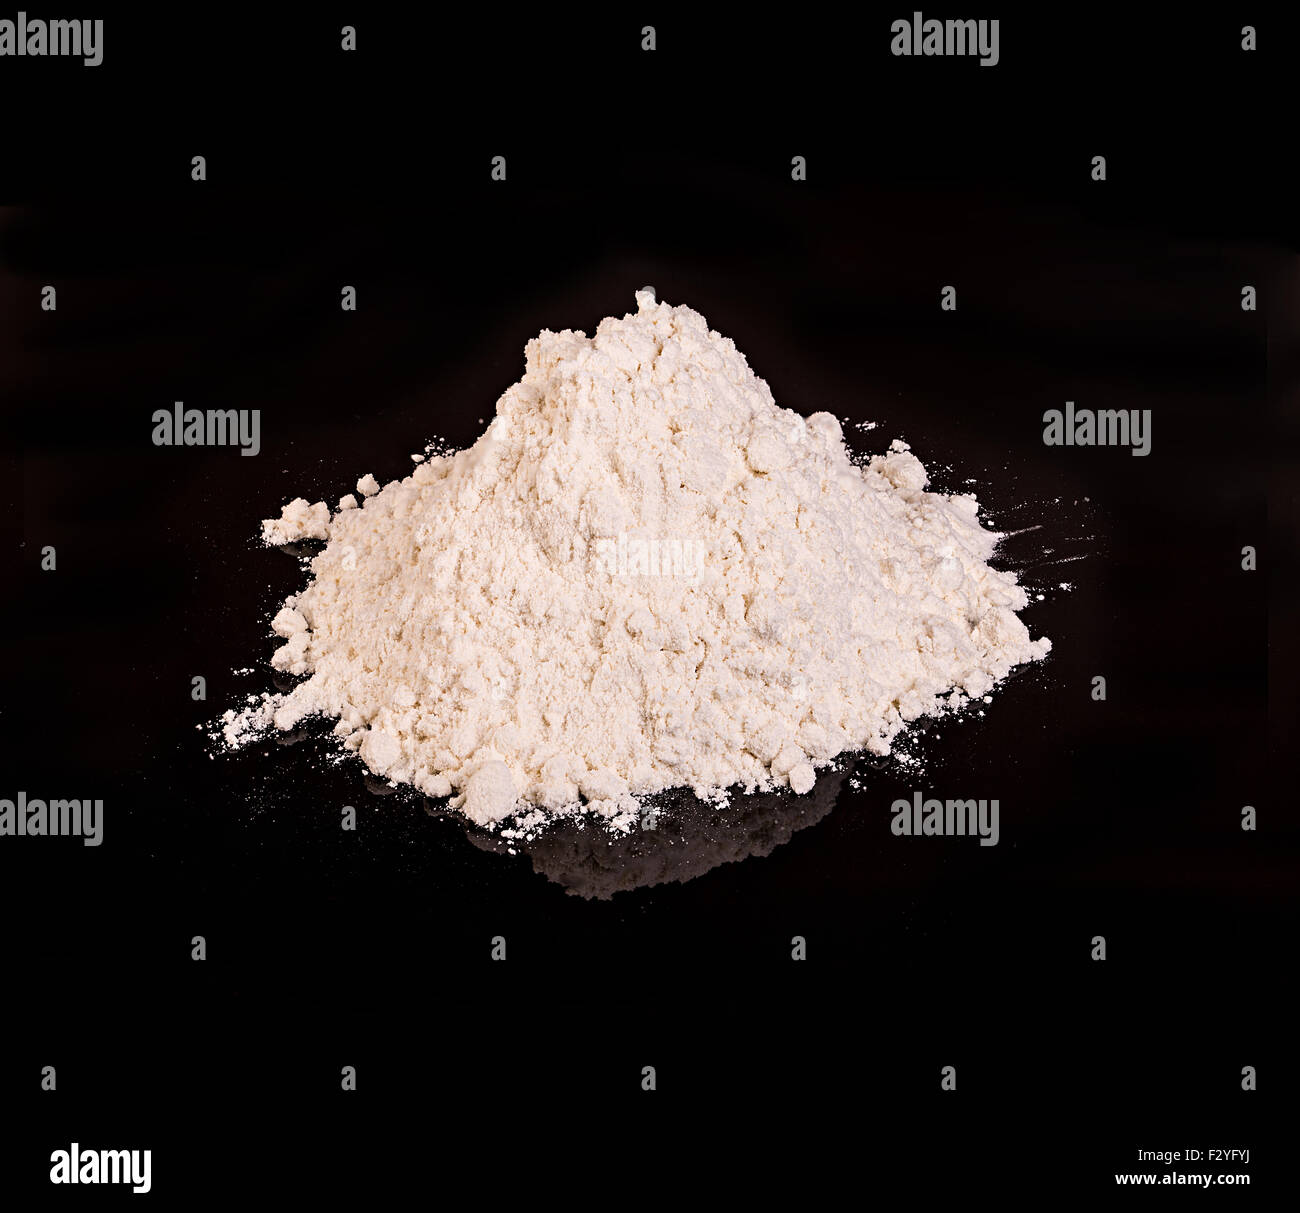 Drug powder close-up on a black background. Stock Photo